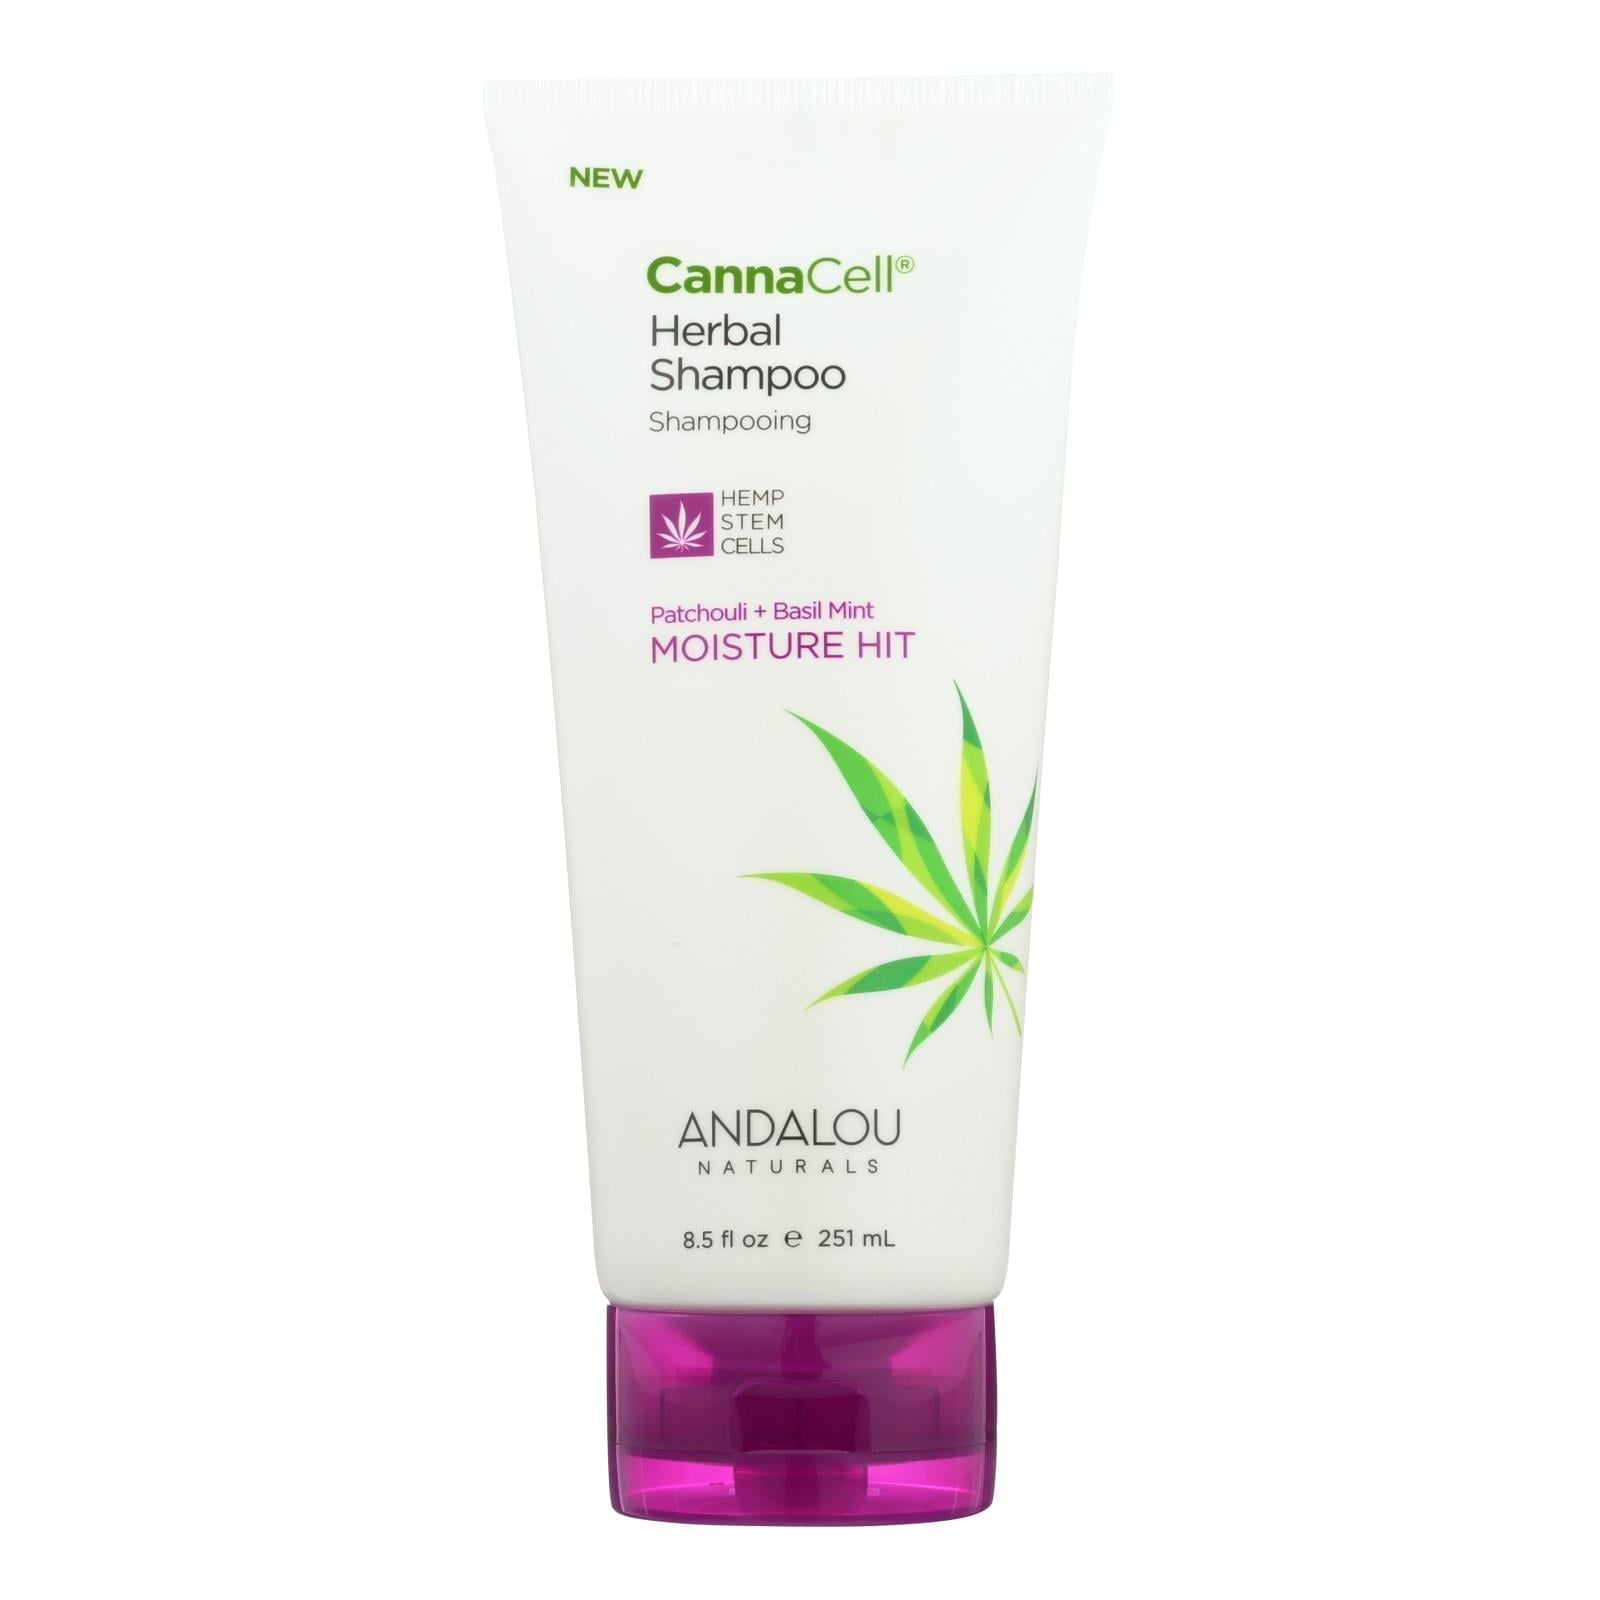 CannaCell Herbal Shampoo with Hemp Stem Cells Patchouli + Basil Mint Moisture Hit 8.5 oz Bottle